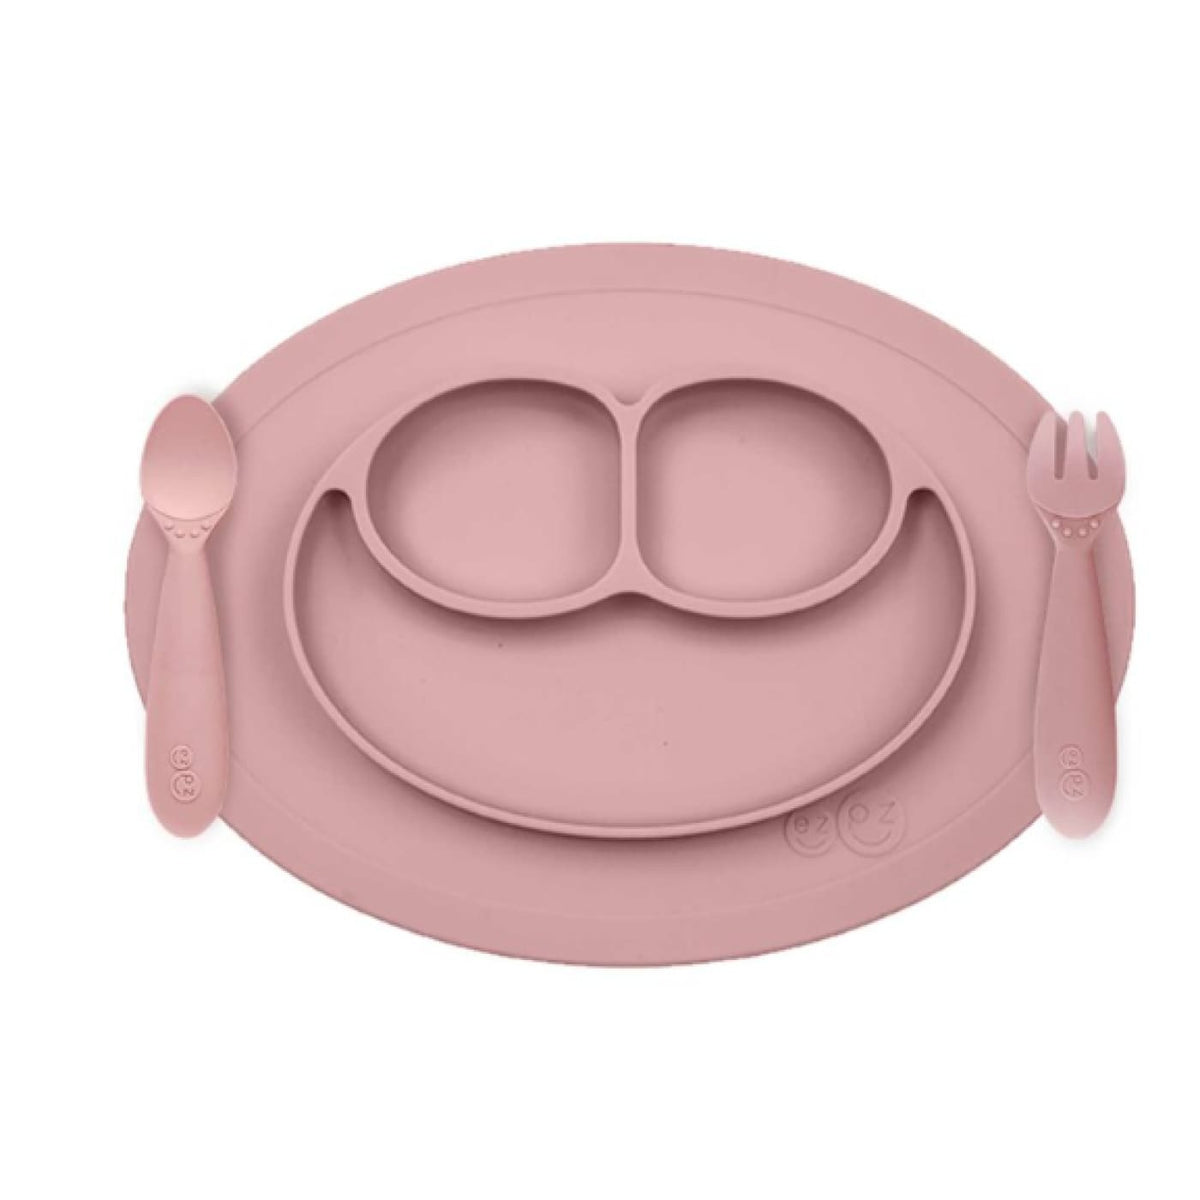 EZPZ Mini Feeding Set - Blush - Blush - NURSING &amp; FEEDING - CUTLERY/PLATES/BOWLS/TOYS